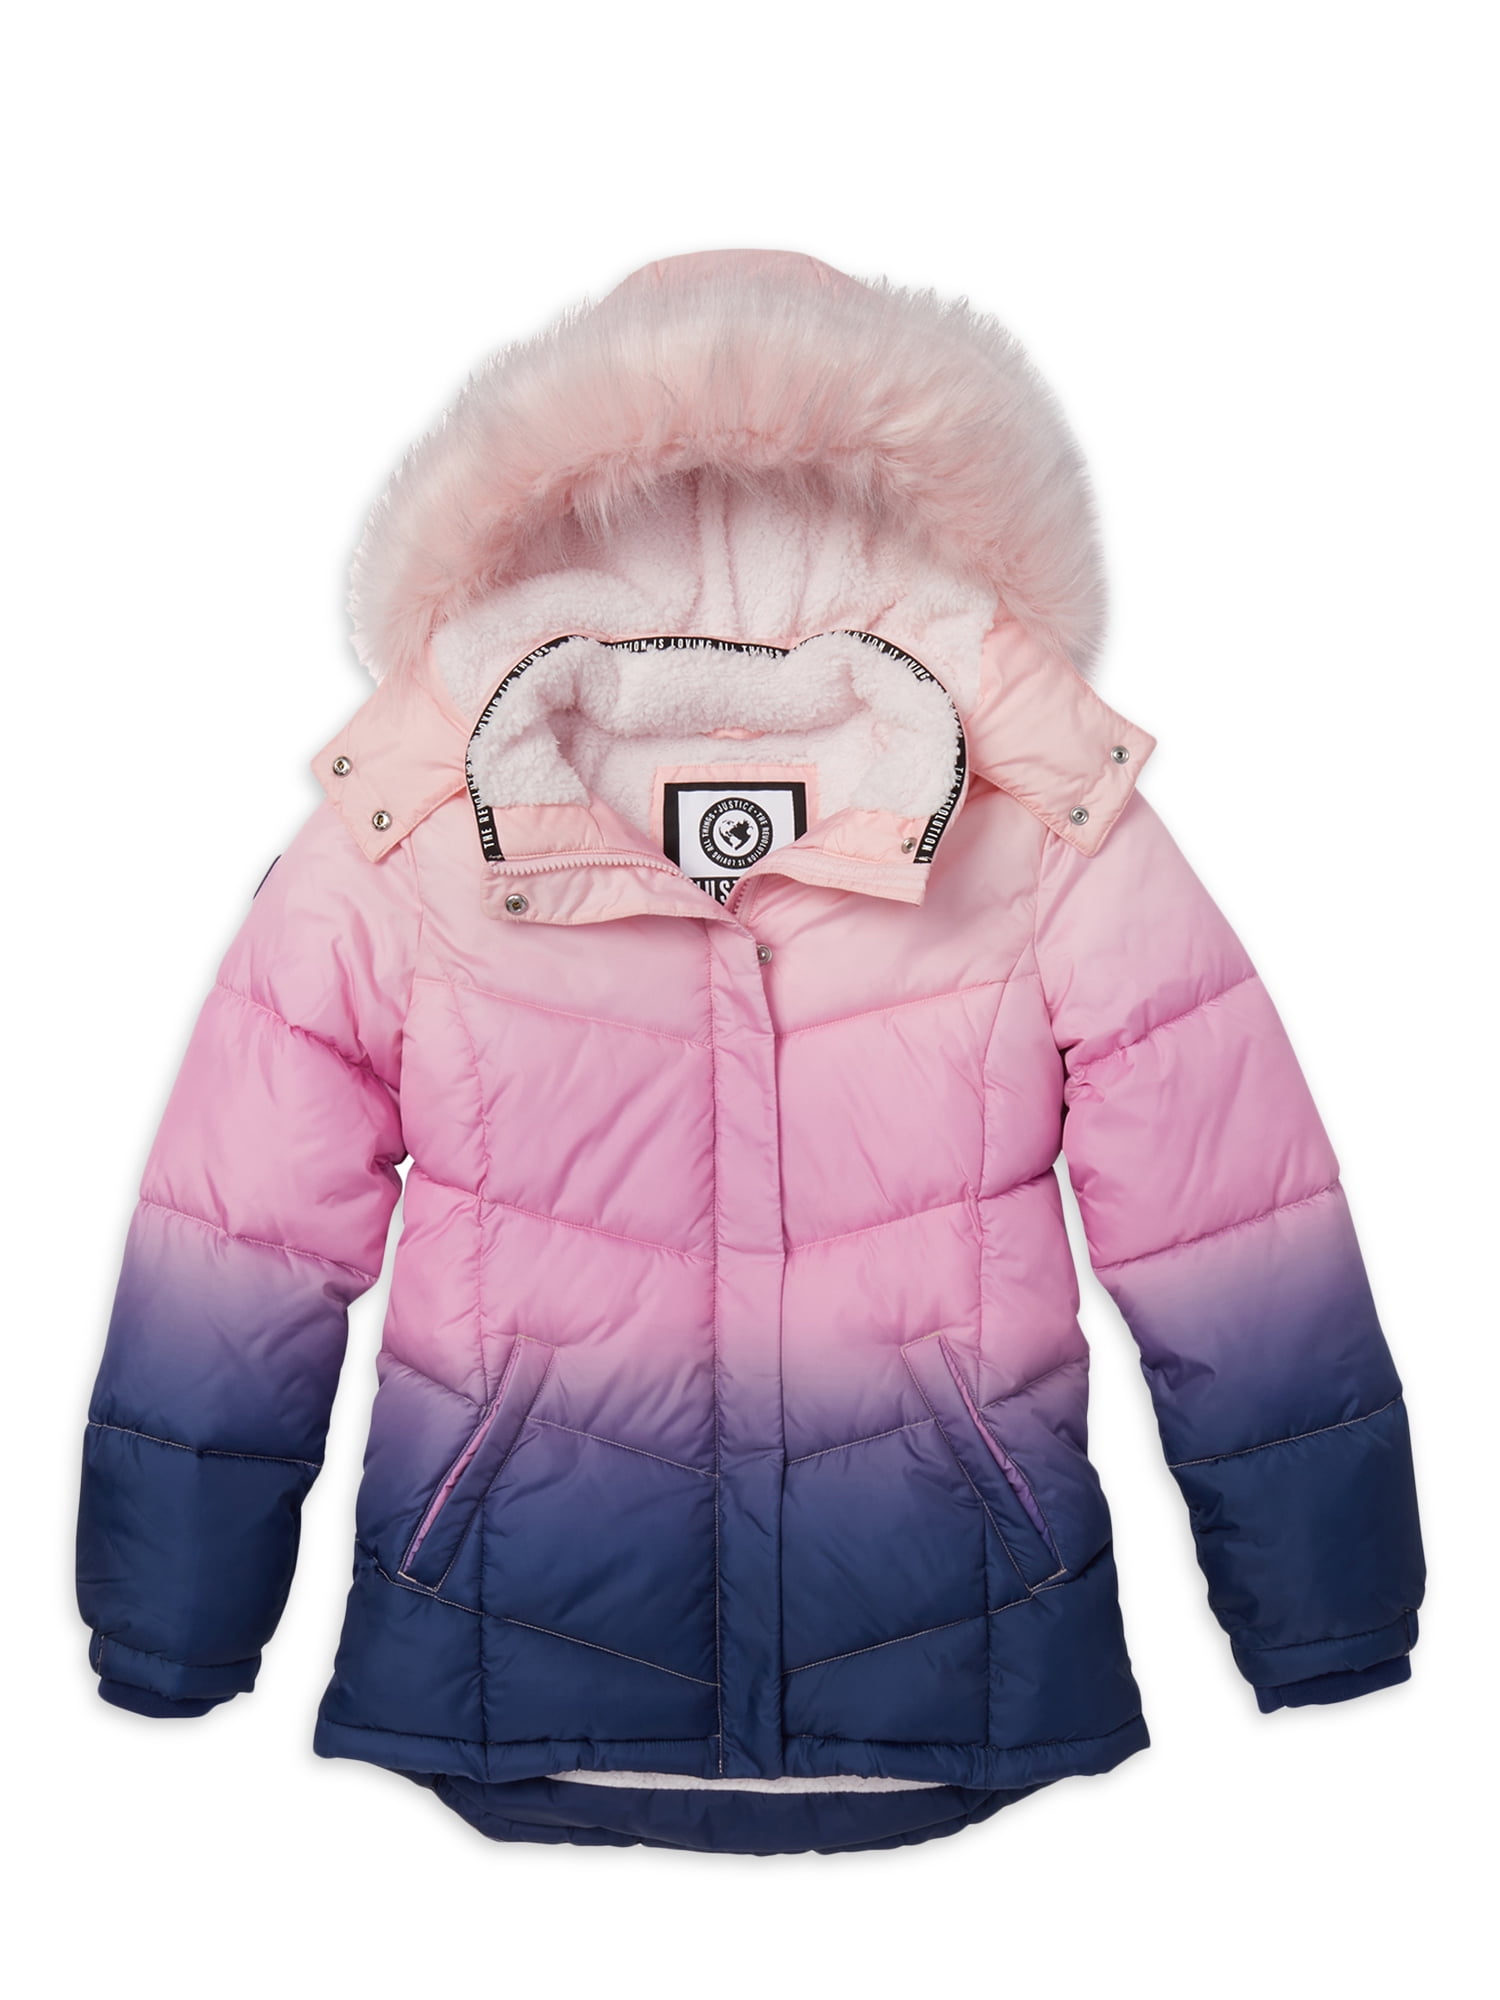 Kids Girls Fur Warm Hooded Flush Coat Fleece Jacket Winter Outwear Thick Clothes 